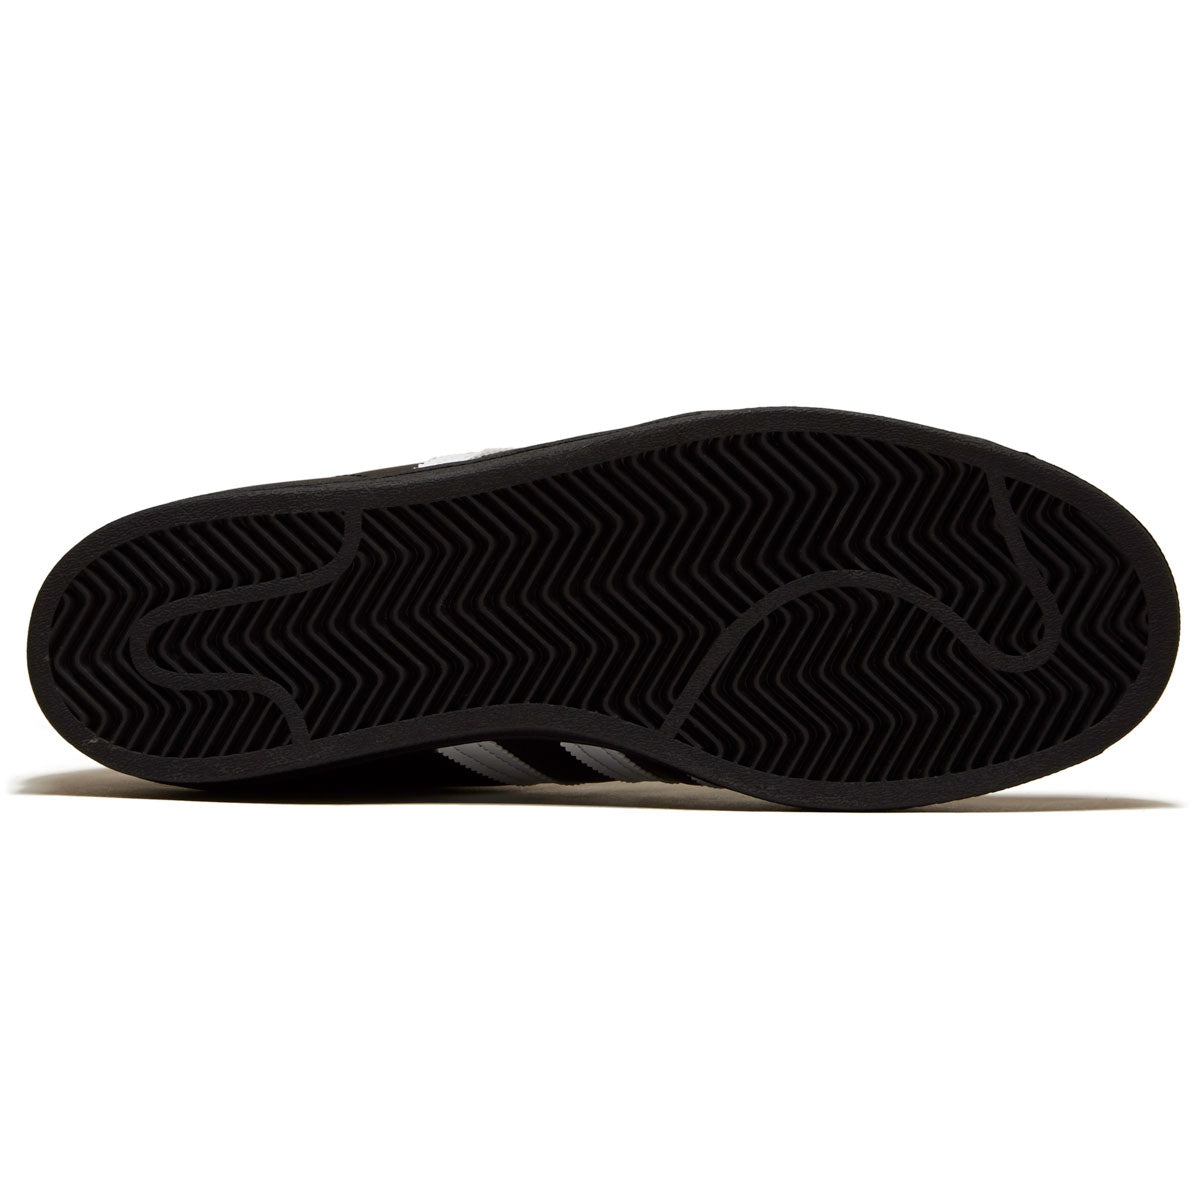 Adidas Superstar Adv Shoes - Core Black/White/White image 4